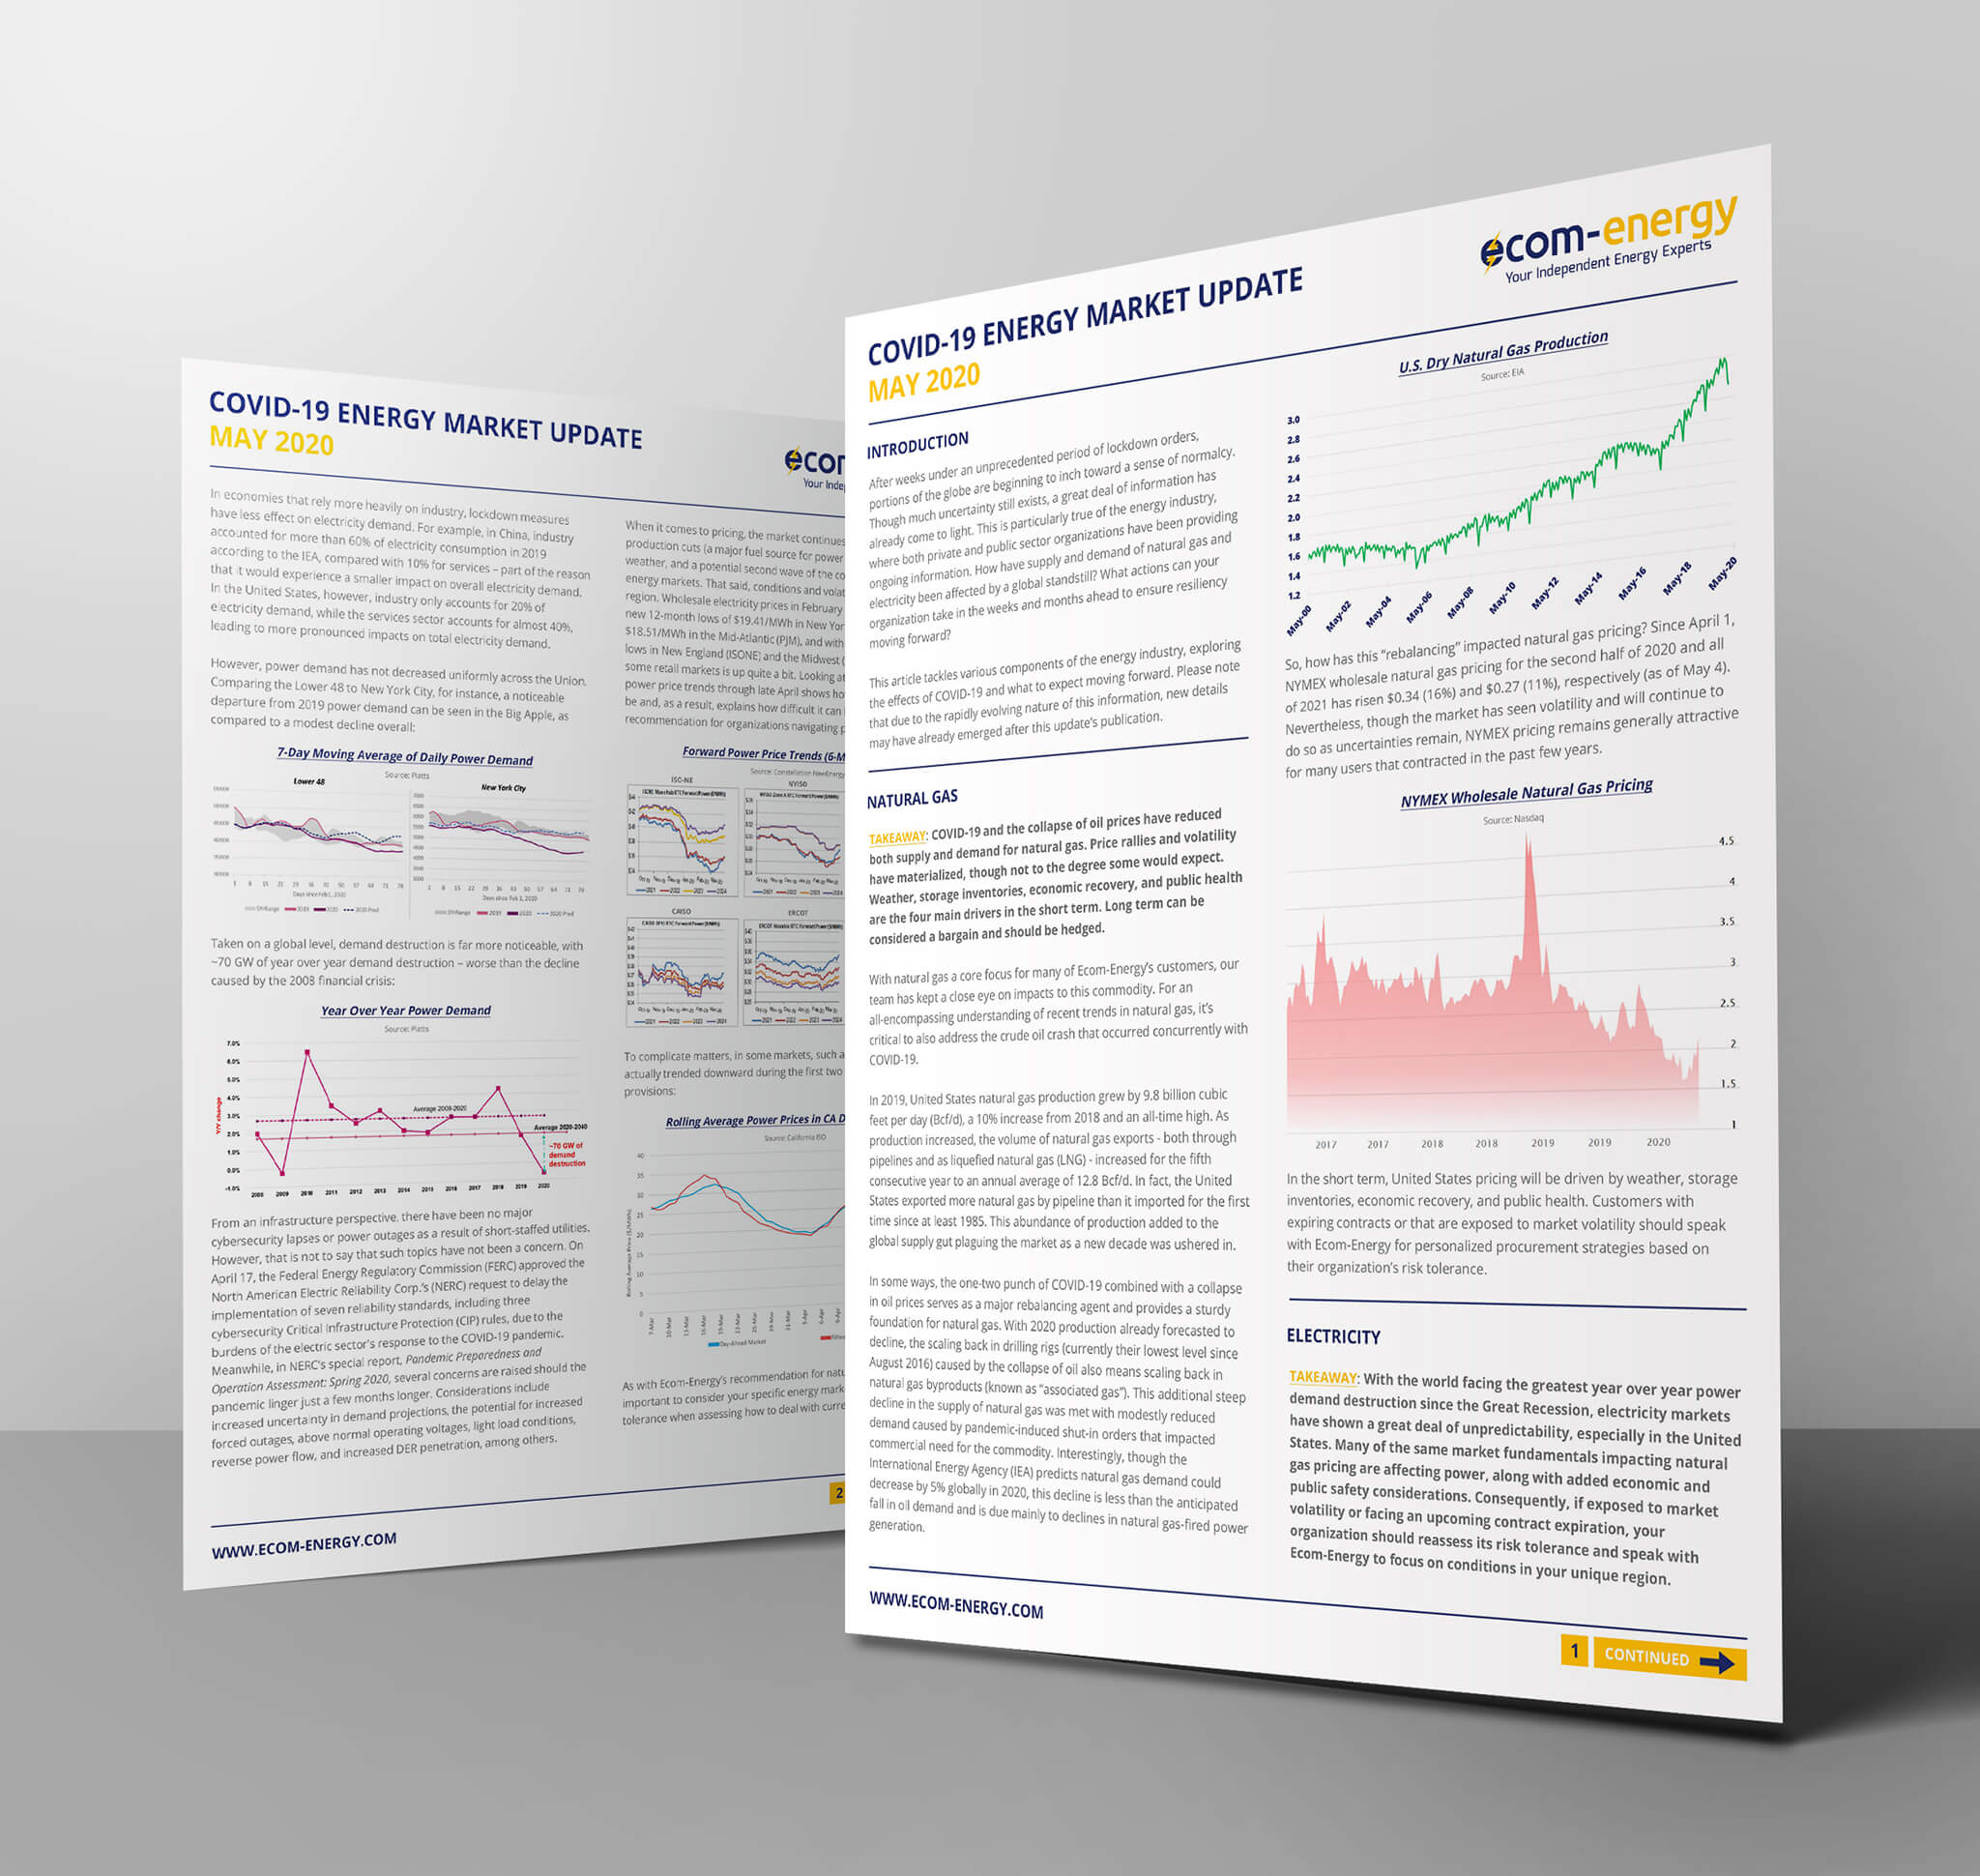 Ecom-Energy's COVID-19 Energy Market Update